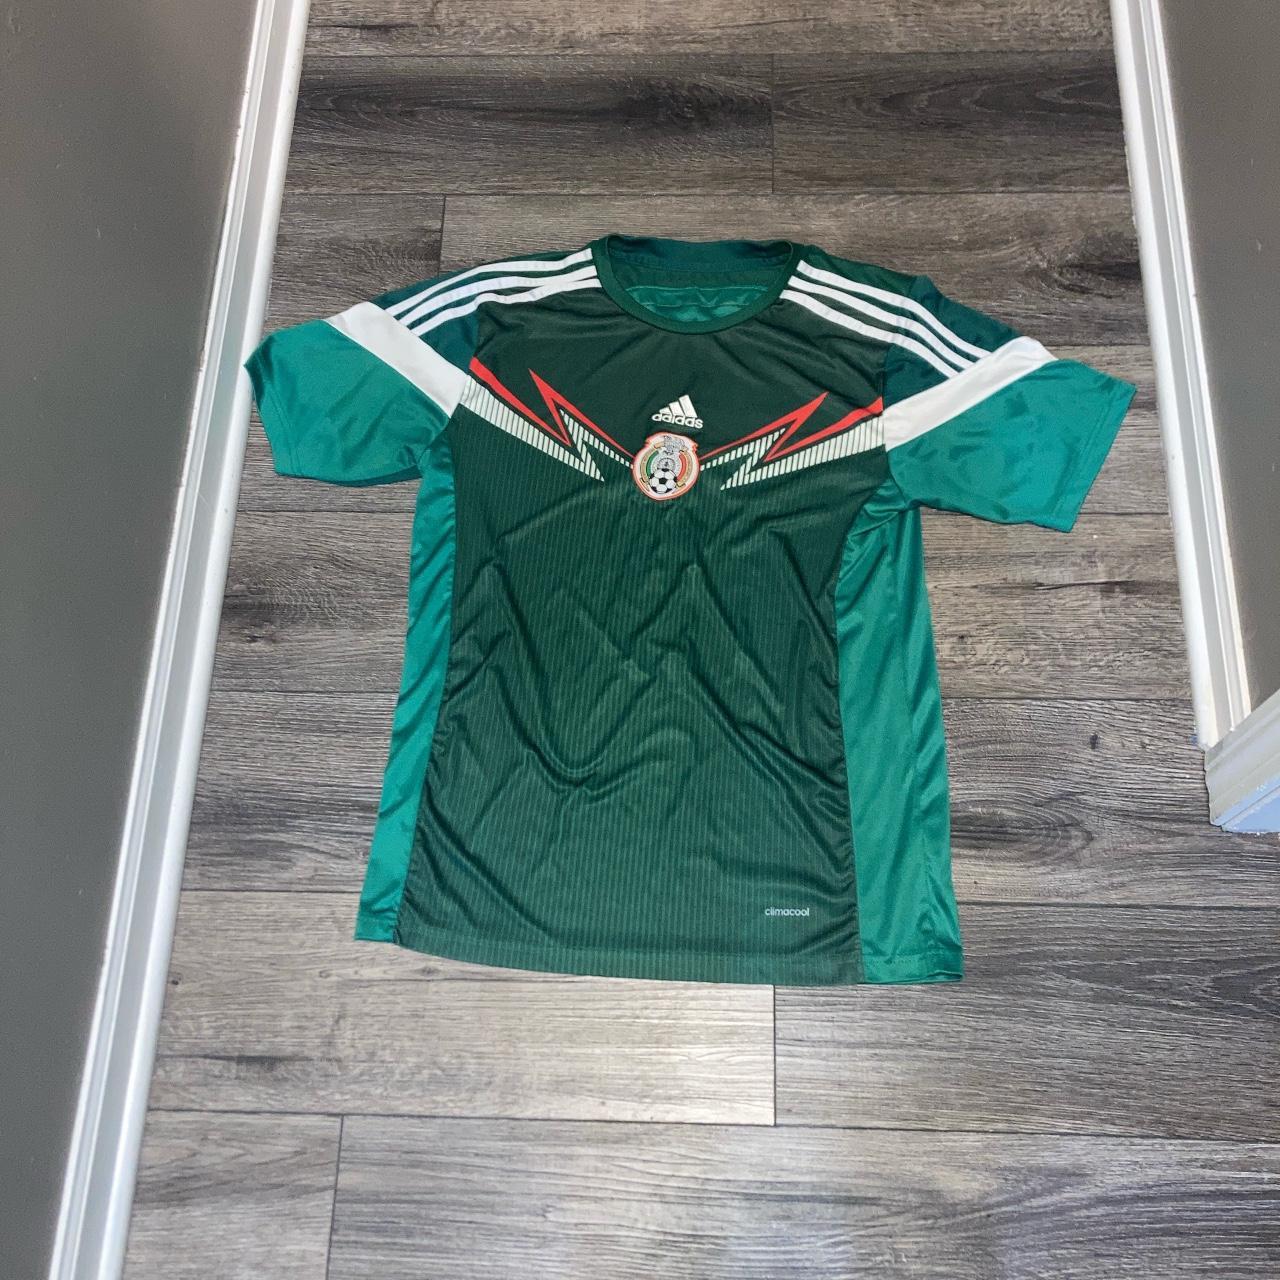 Mexico jersey - Depop